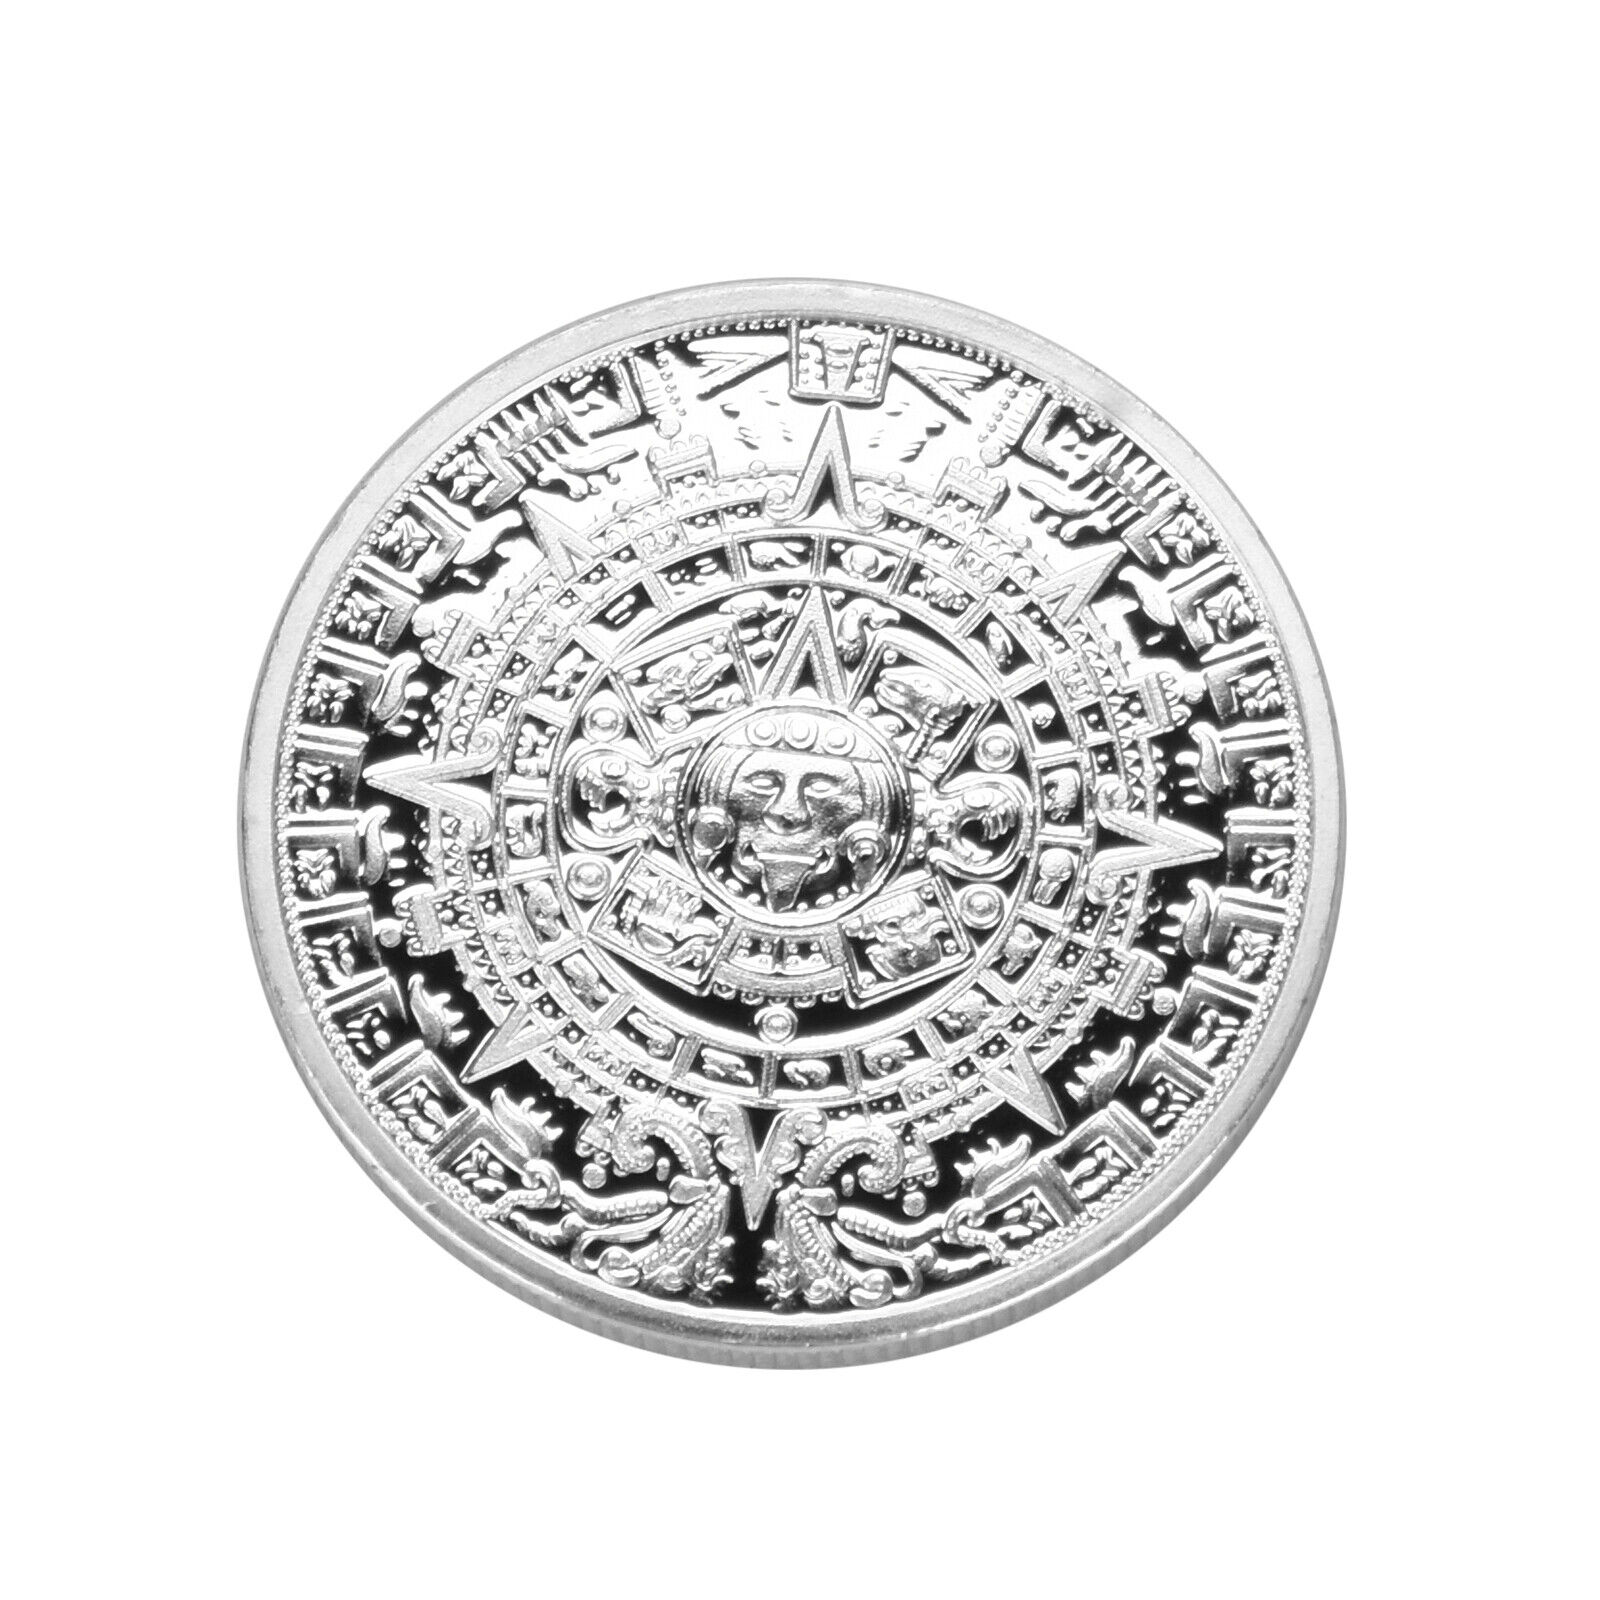 40mm Maya Calendar Plated Coin Souvenir Mayan Aztec Badge Pin Mexico Gift E